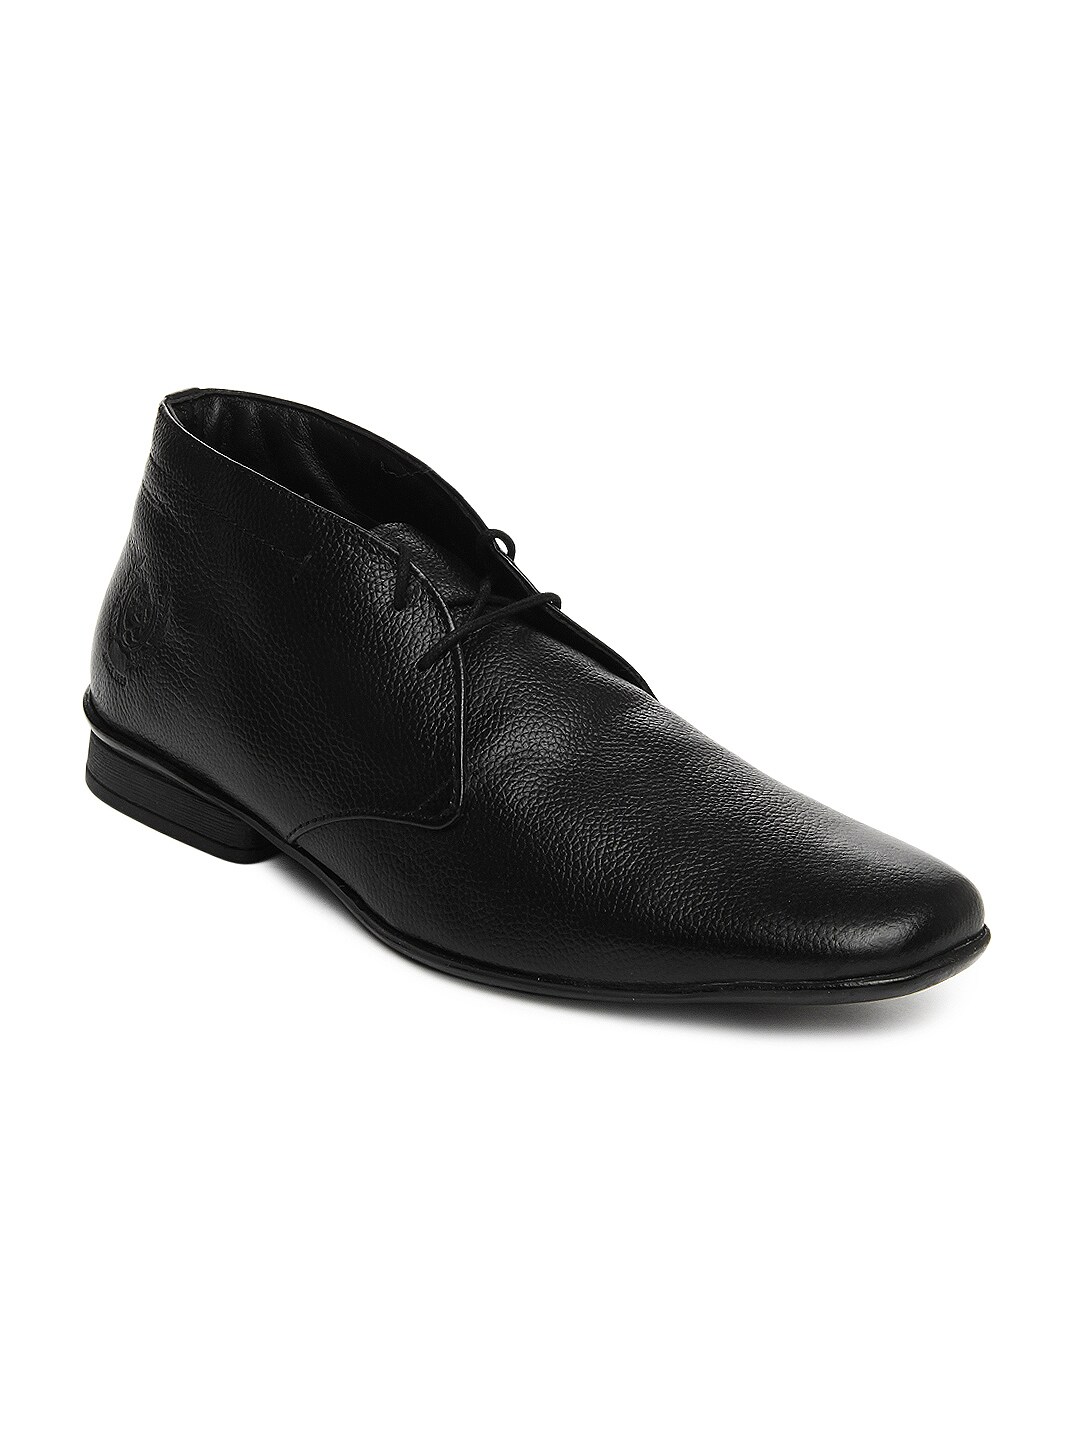 U.S. Polo Assn. Men Black Leather Semi-Formal Shoes